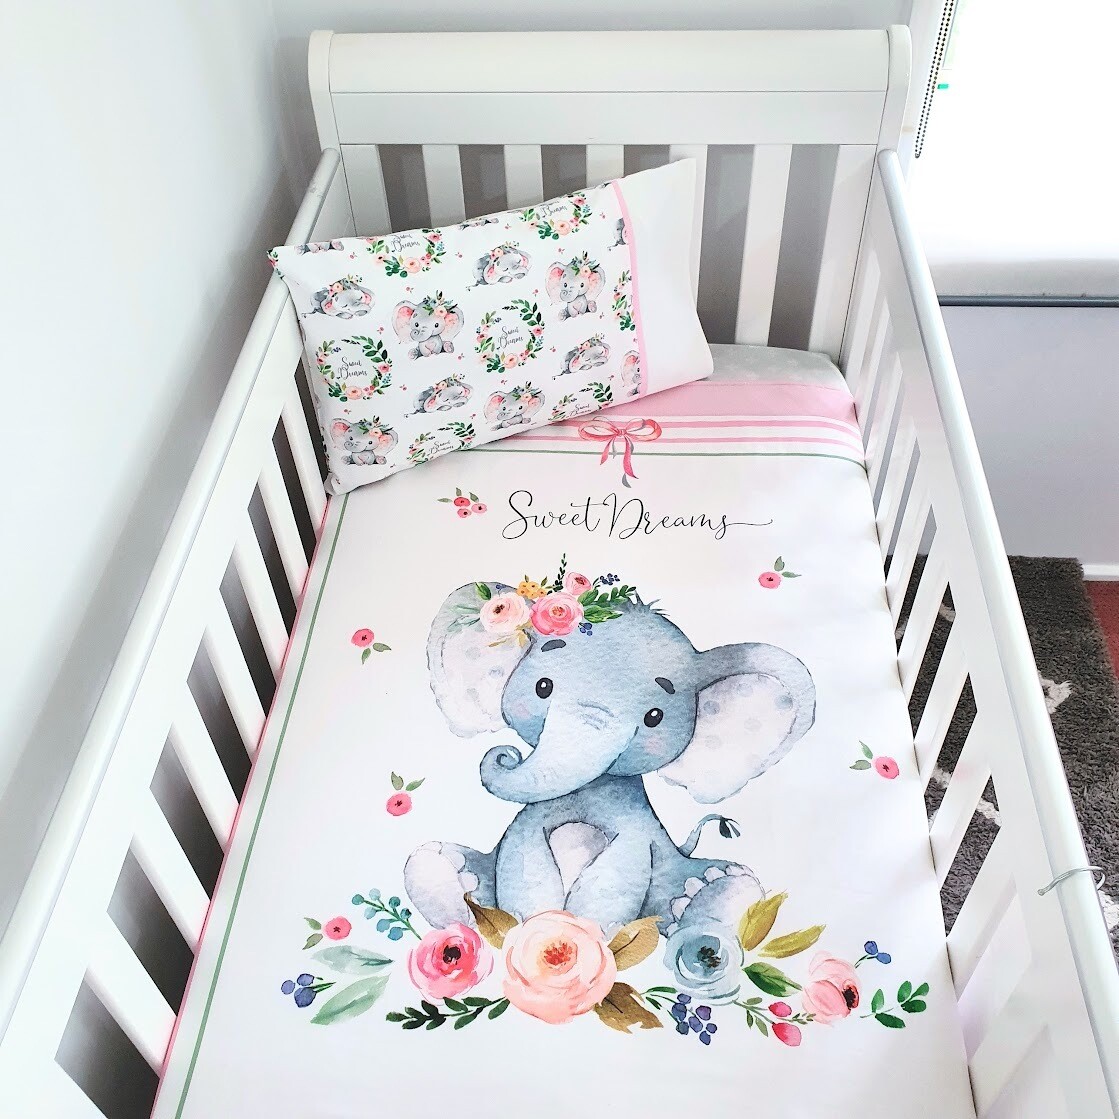 Sweet Dreams" floral Elephant theme Cot quilt + matching pillowcase set.